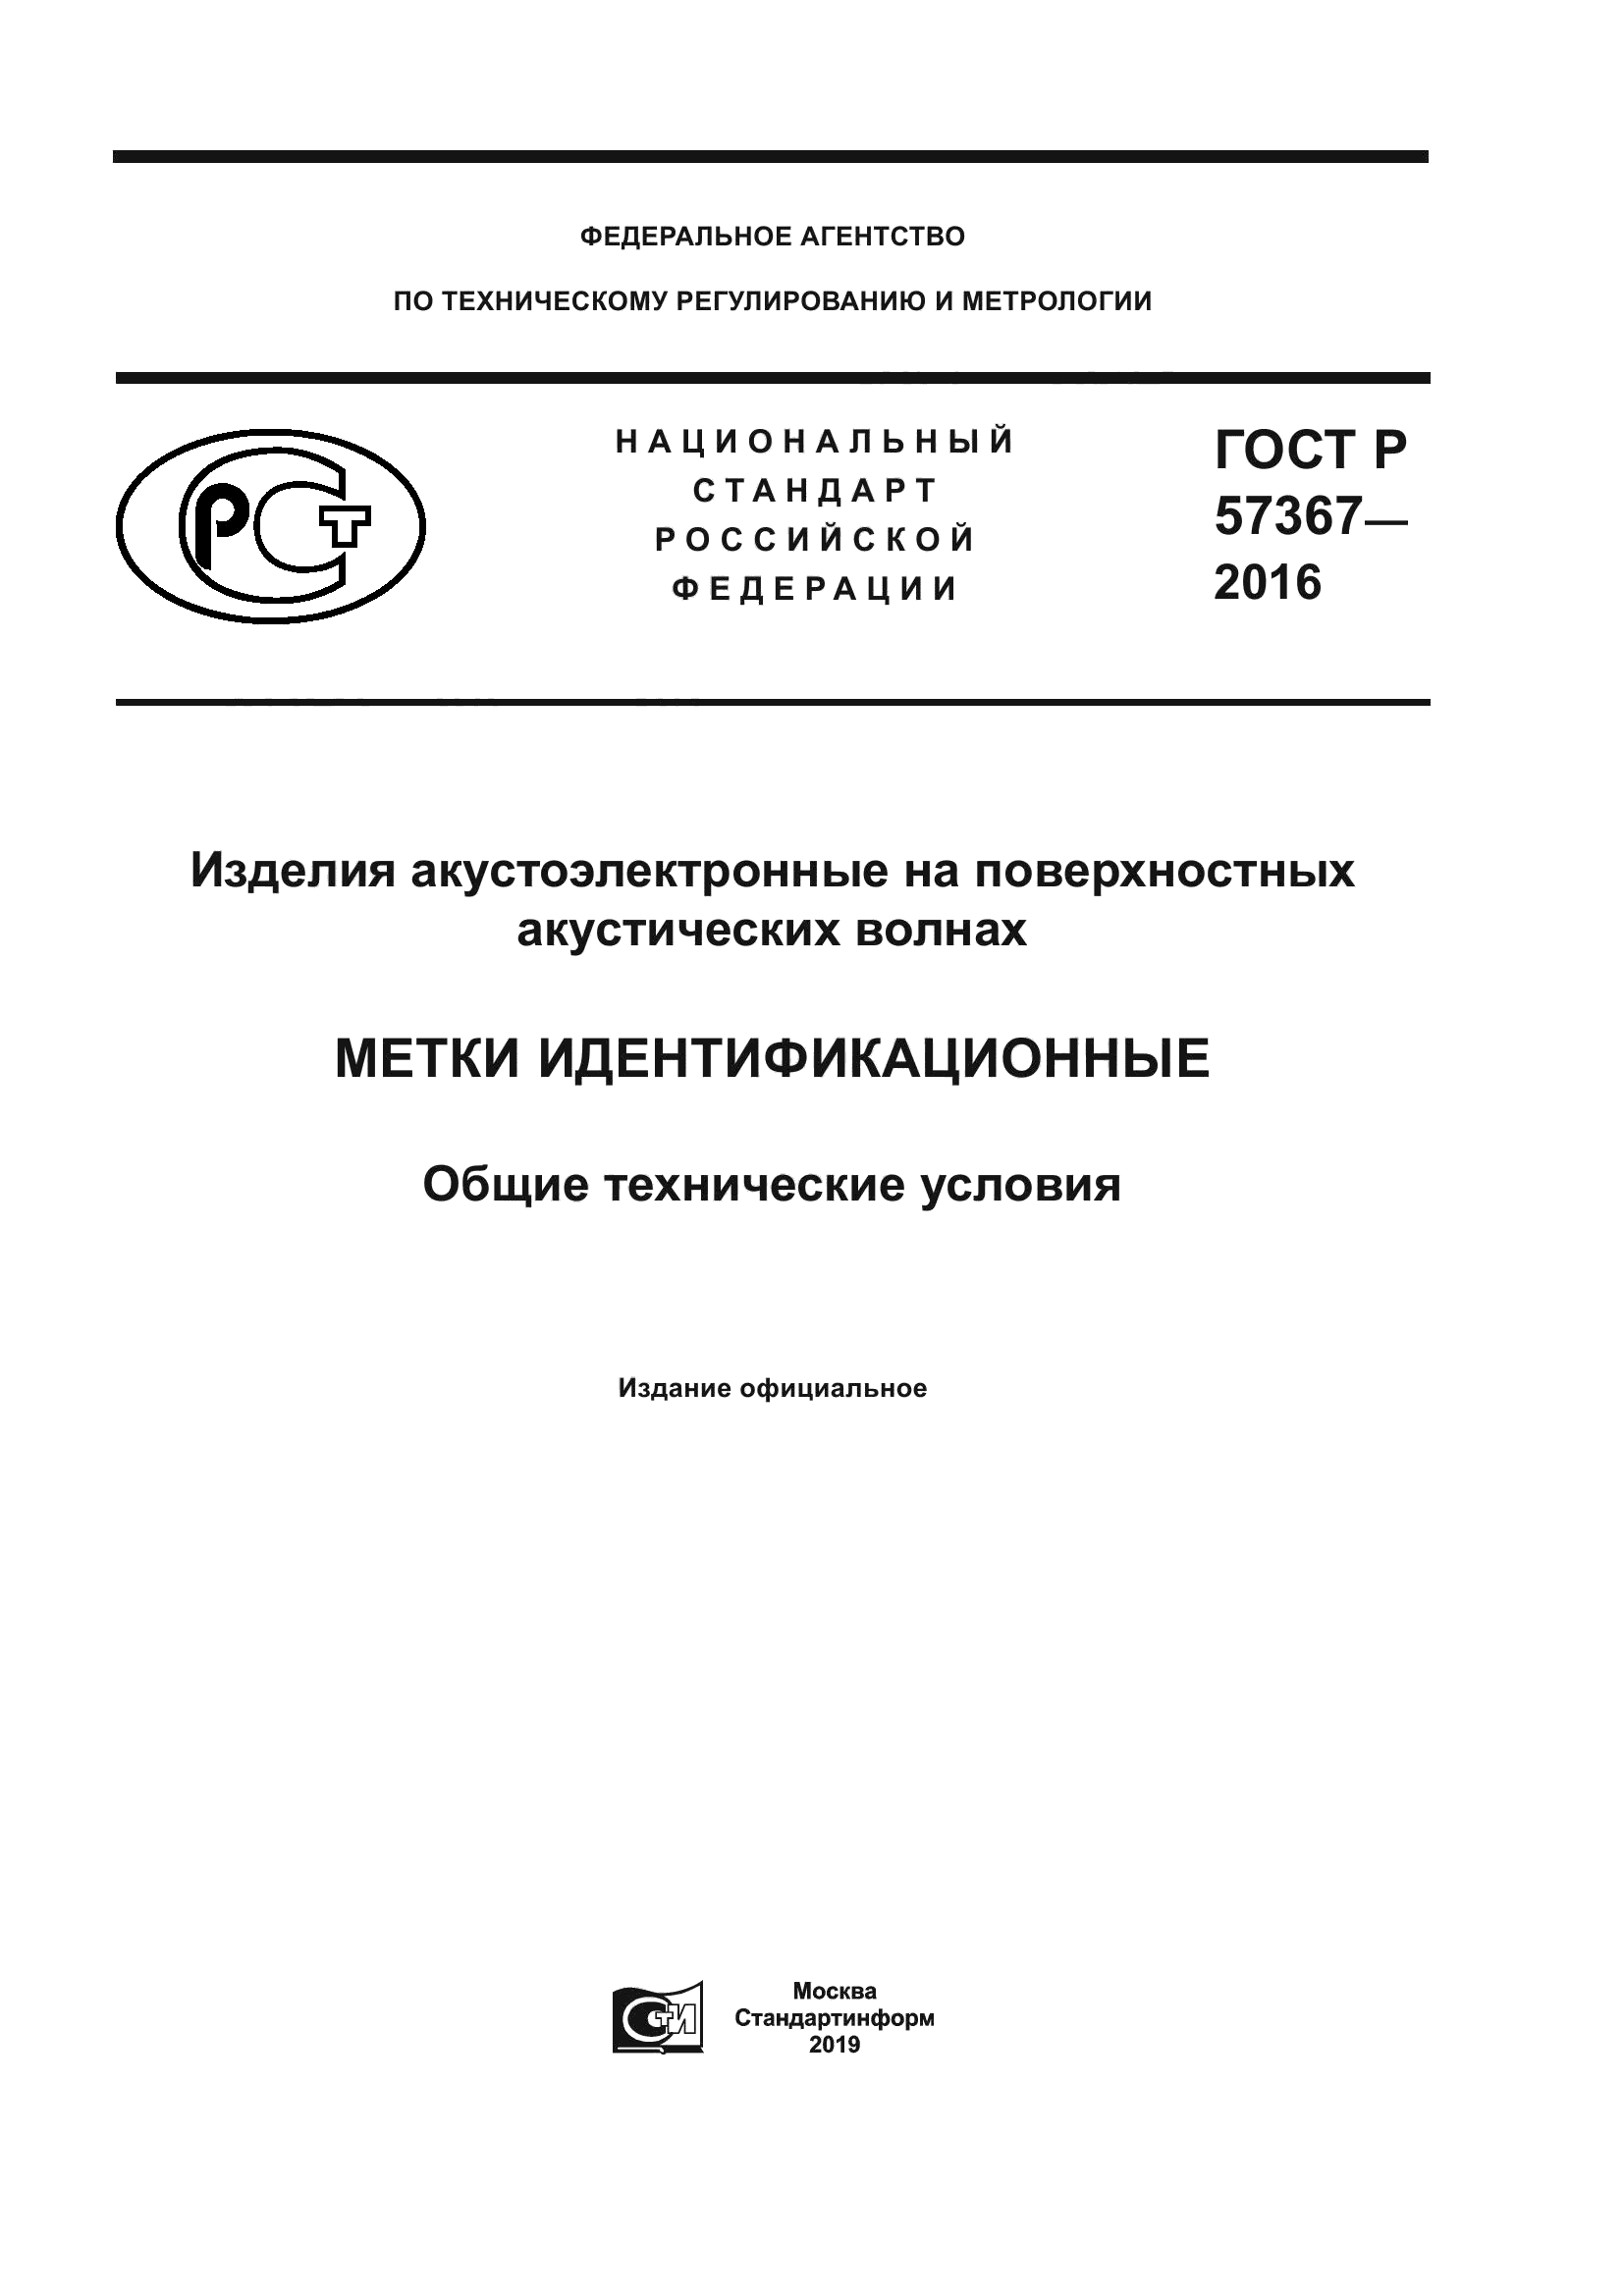 ГОСТ Р 57367-2016